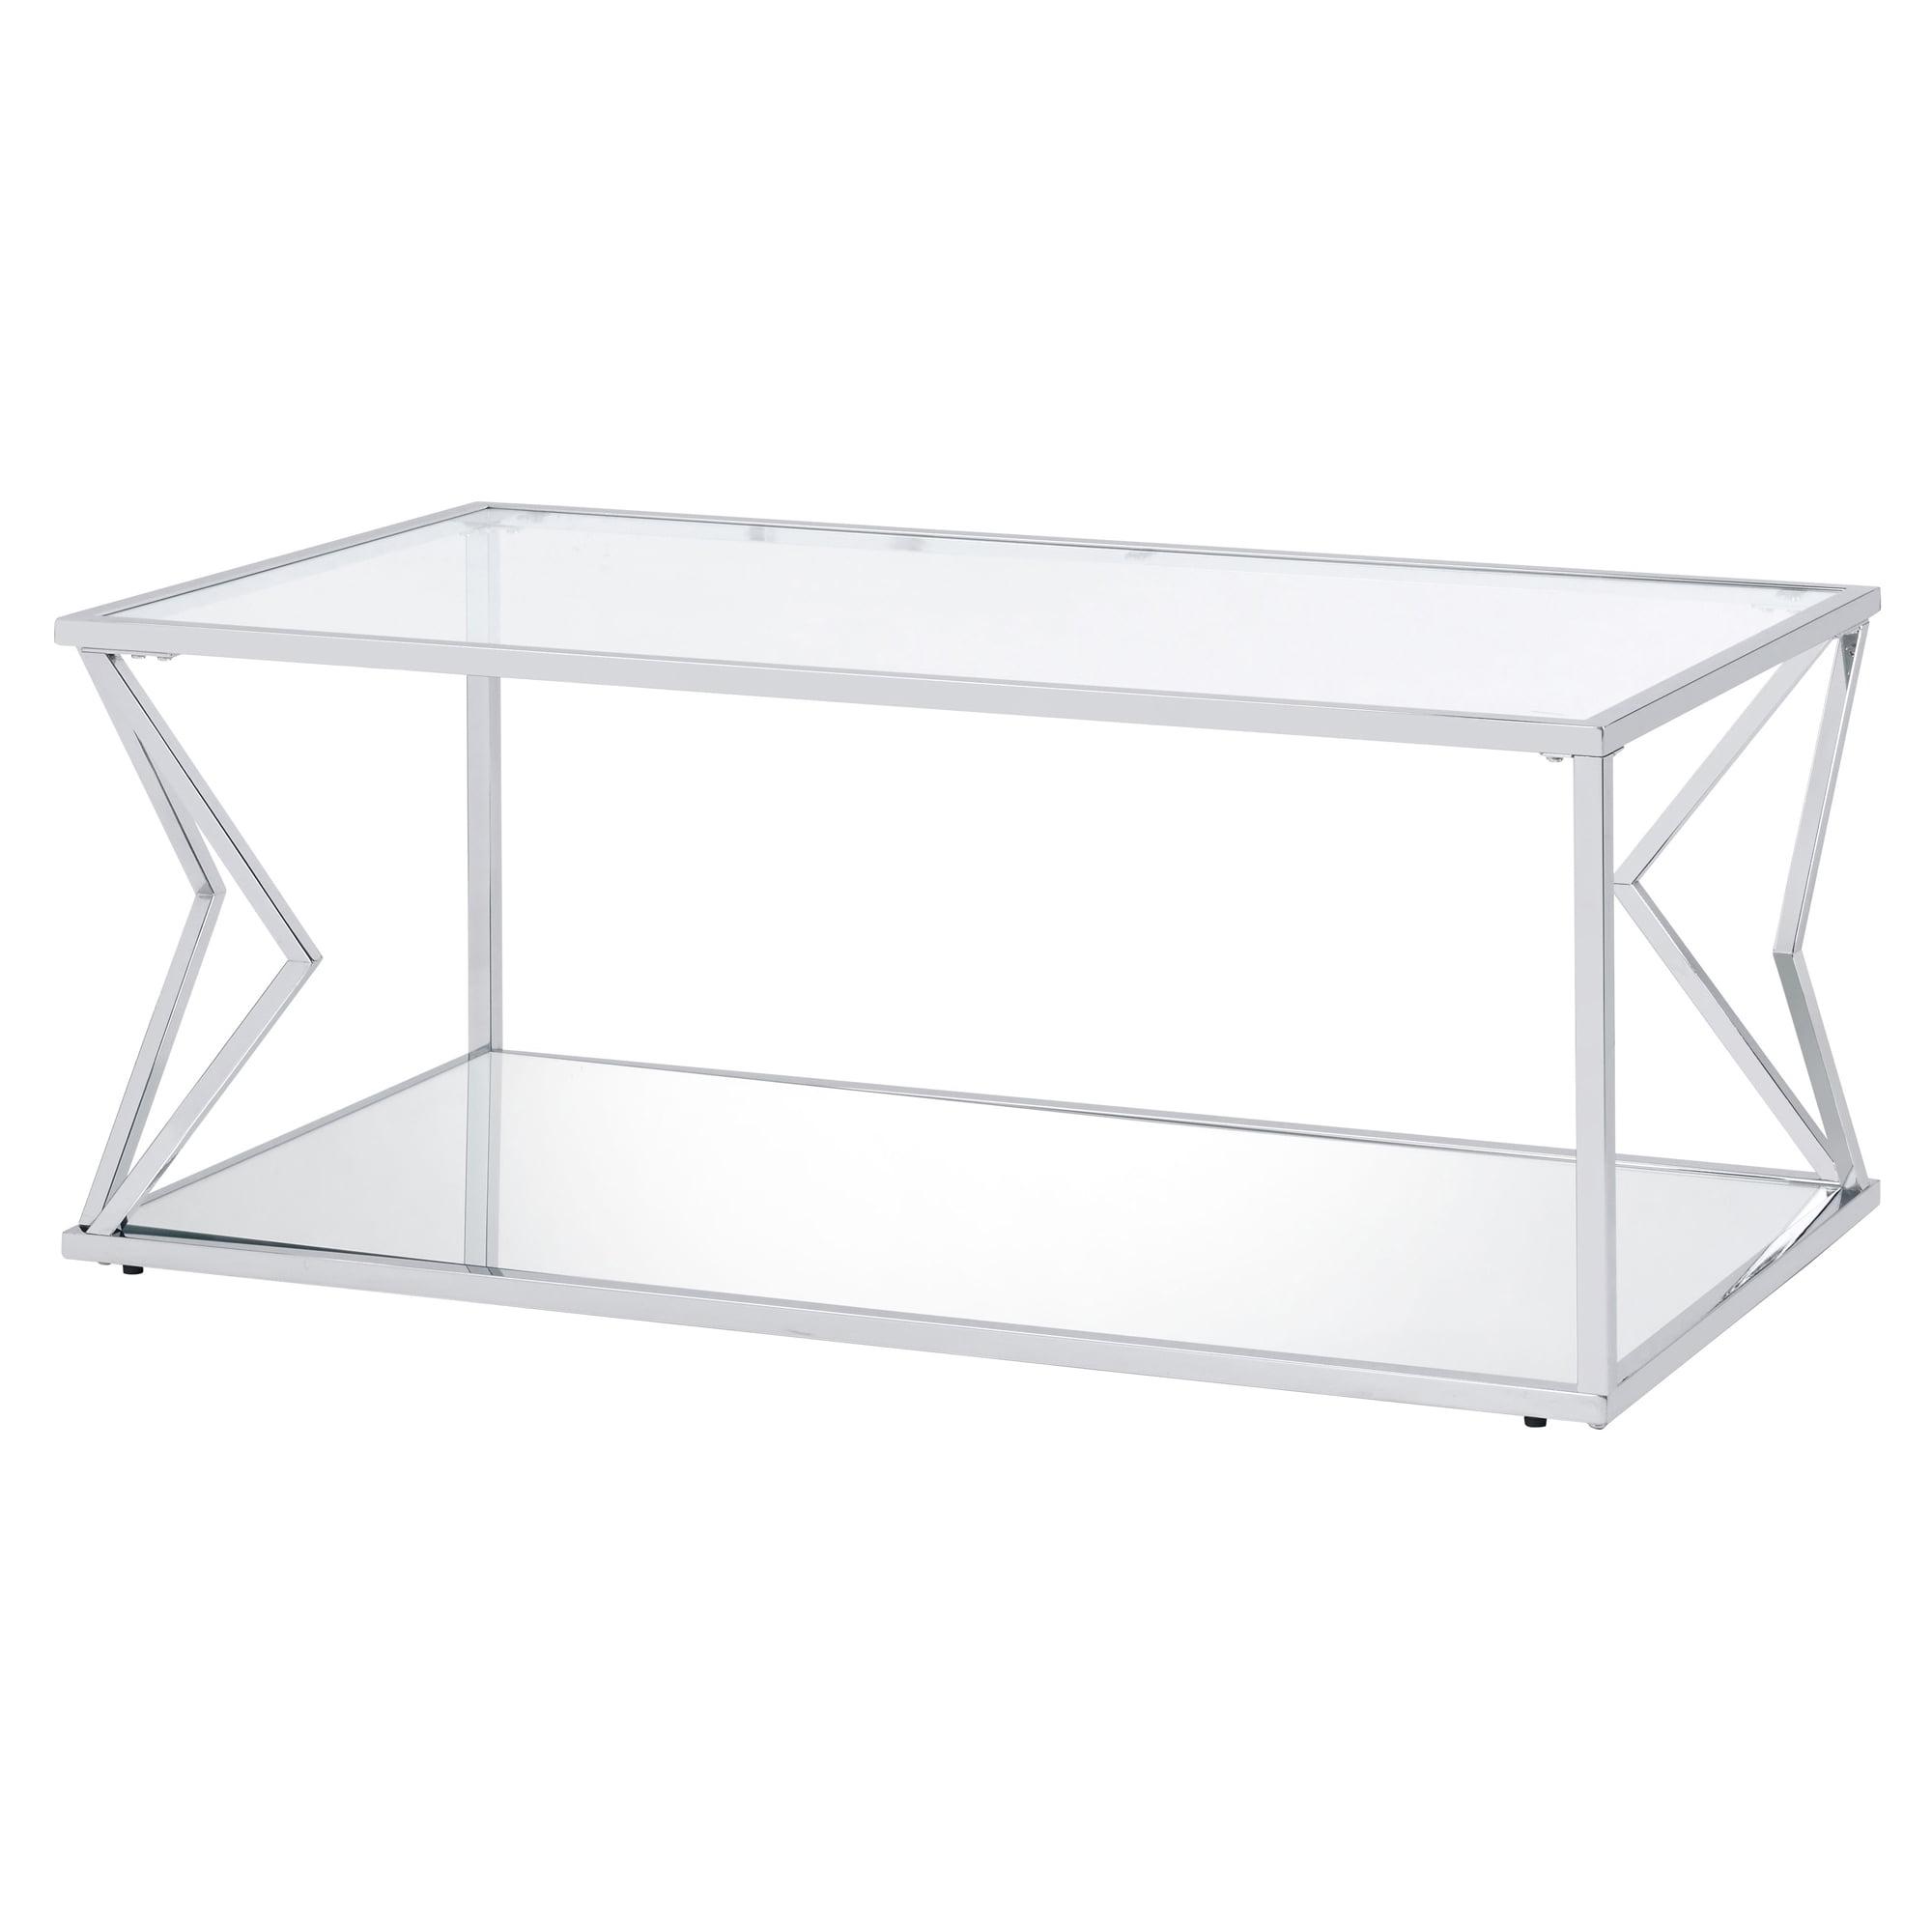 Sleek Chrome and Clear Glass Rectangular Coffee Table with Shelf